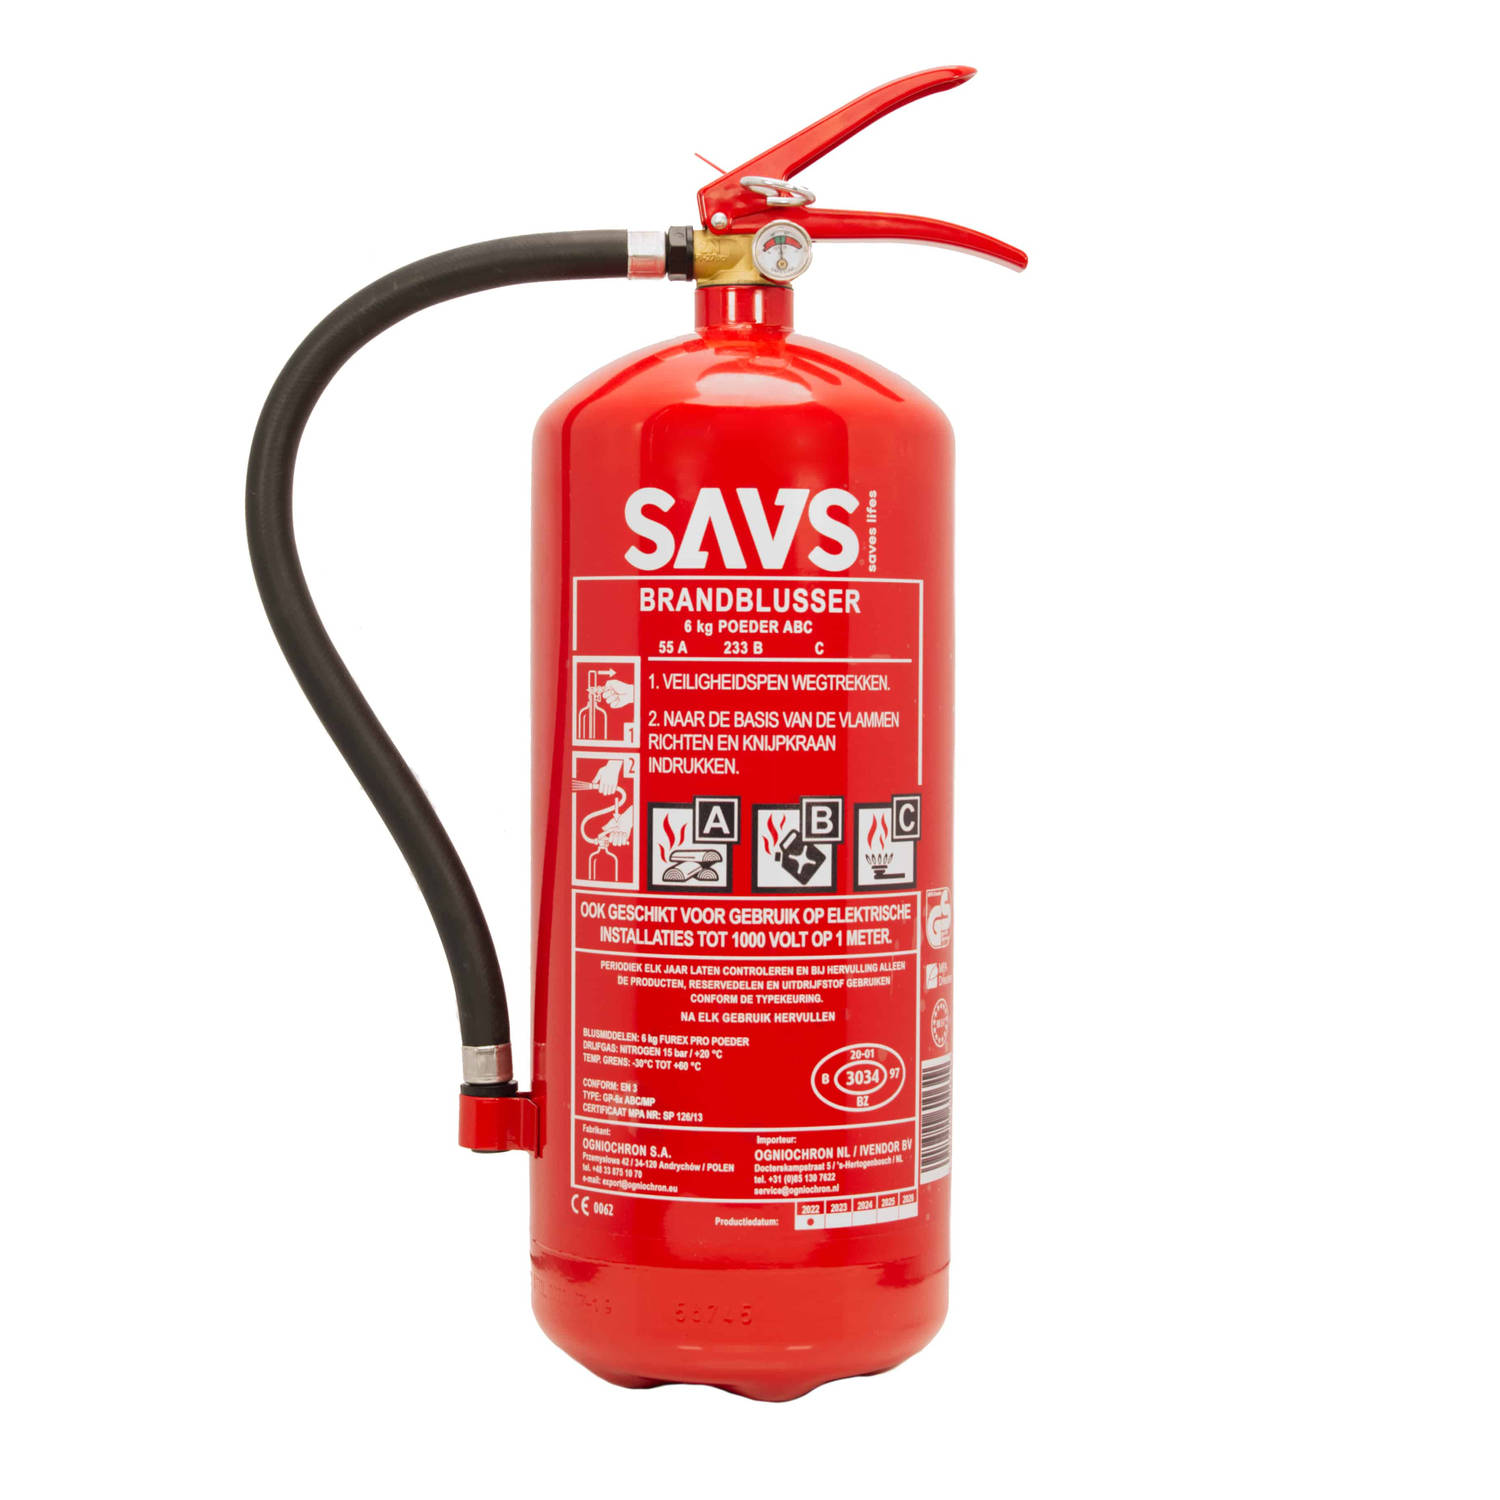 SAVS® Brandblusser poeder 6 kg - GP-6x ABC/MP PLUS